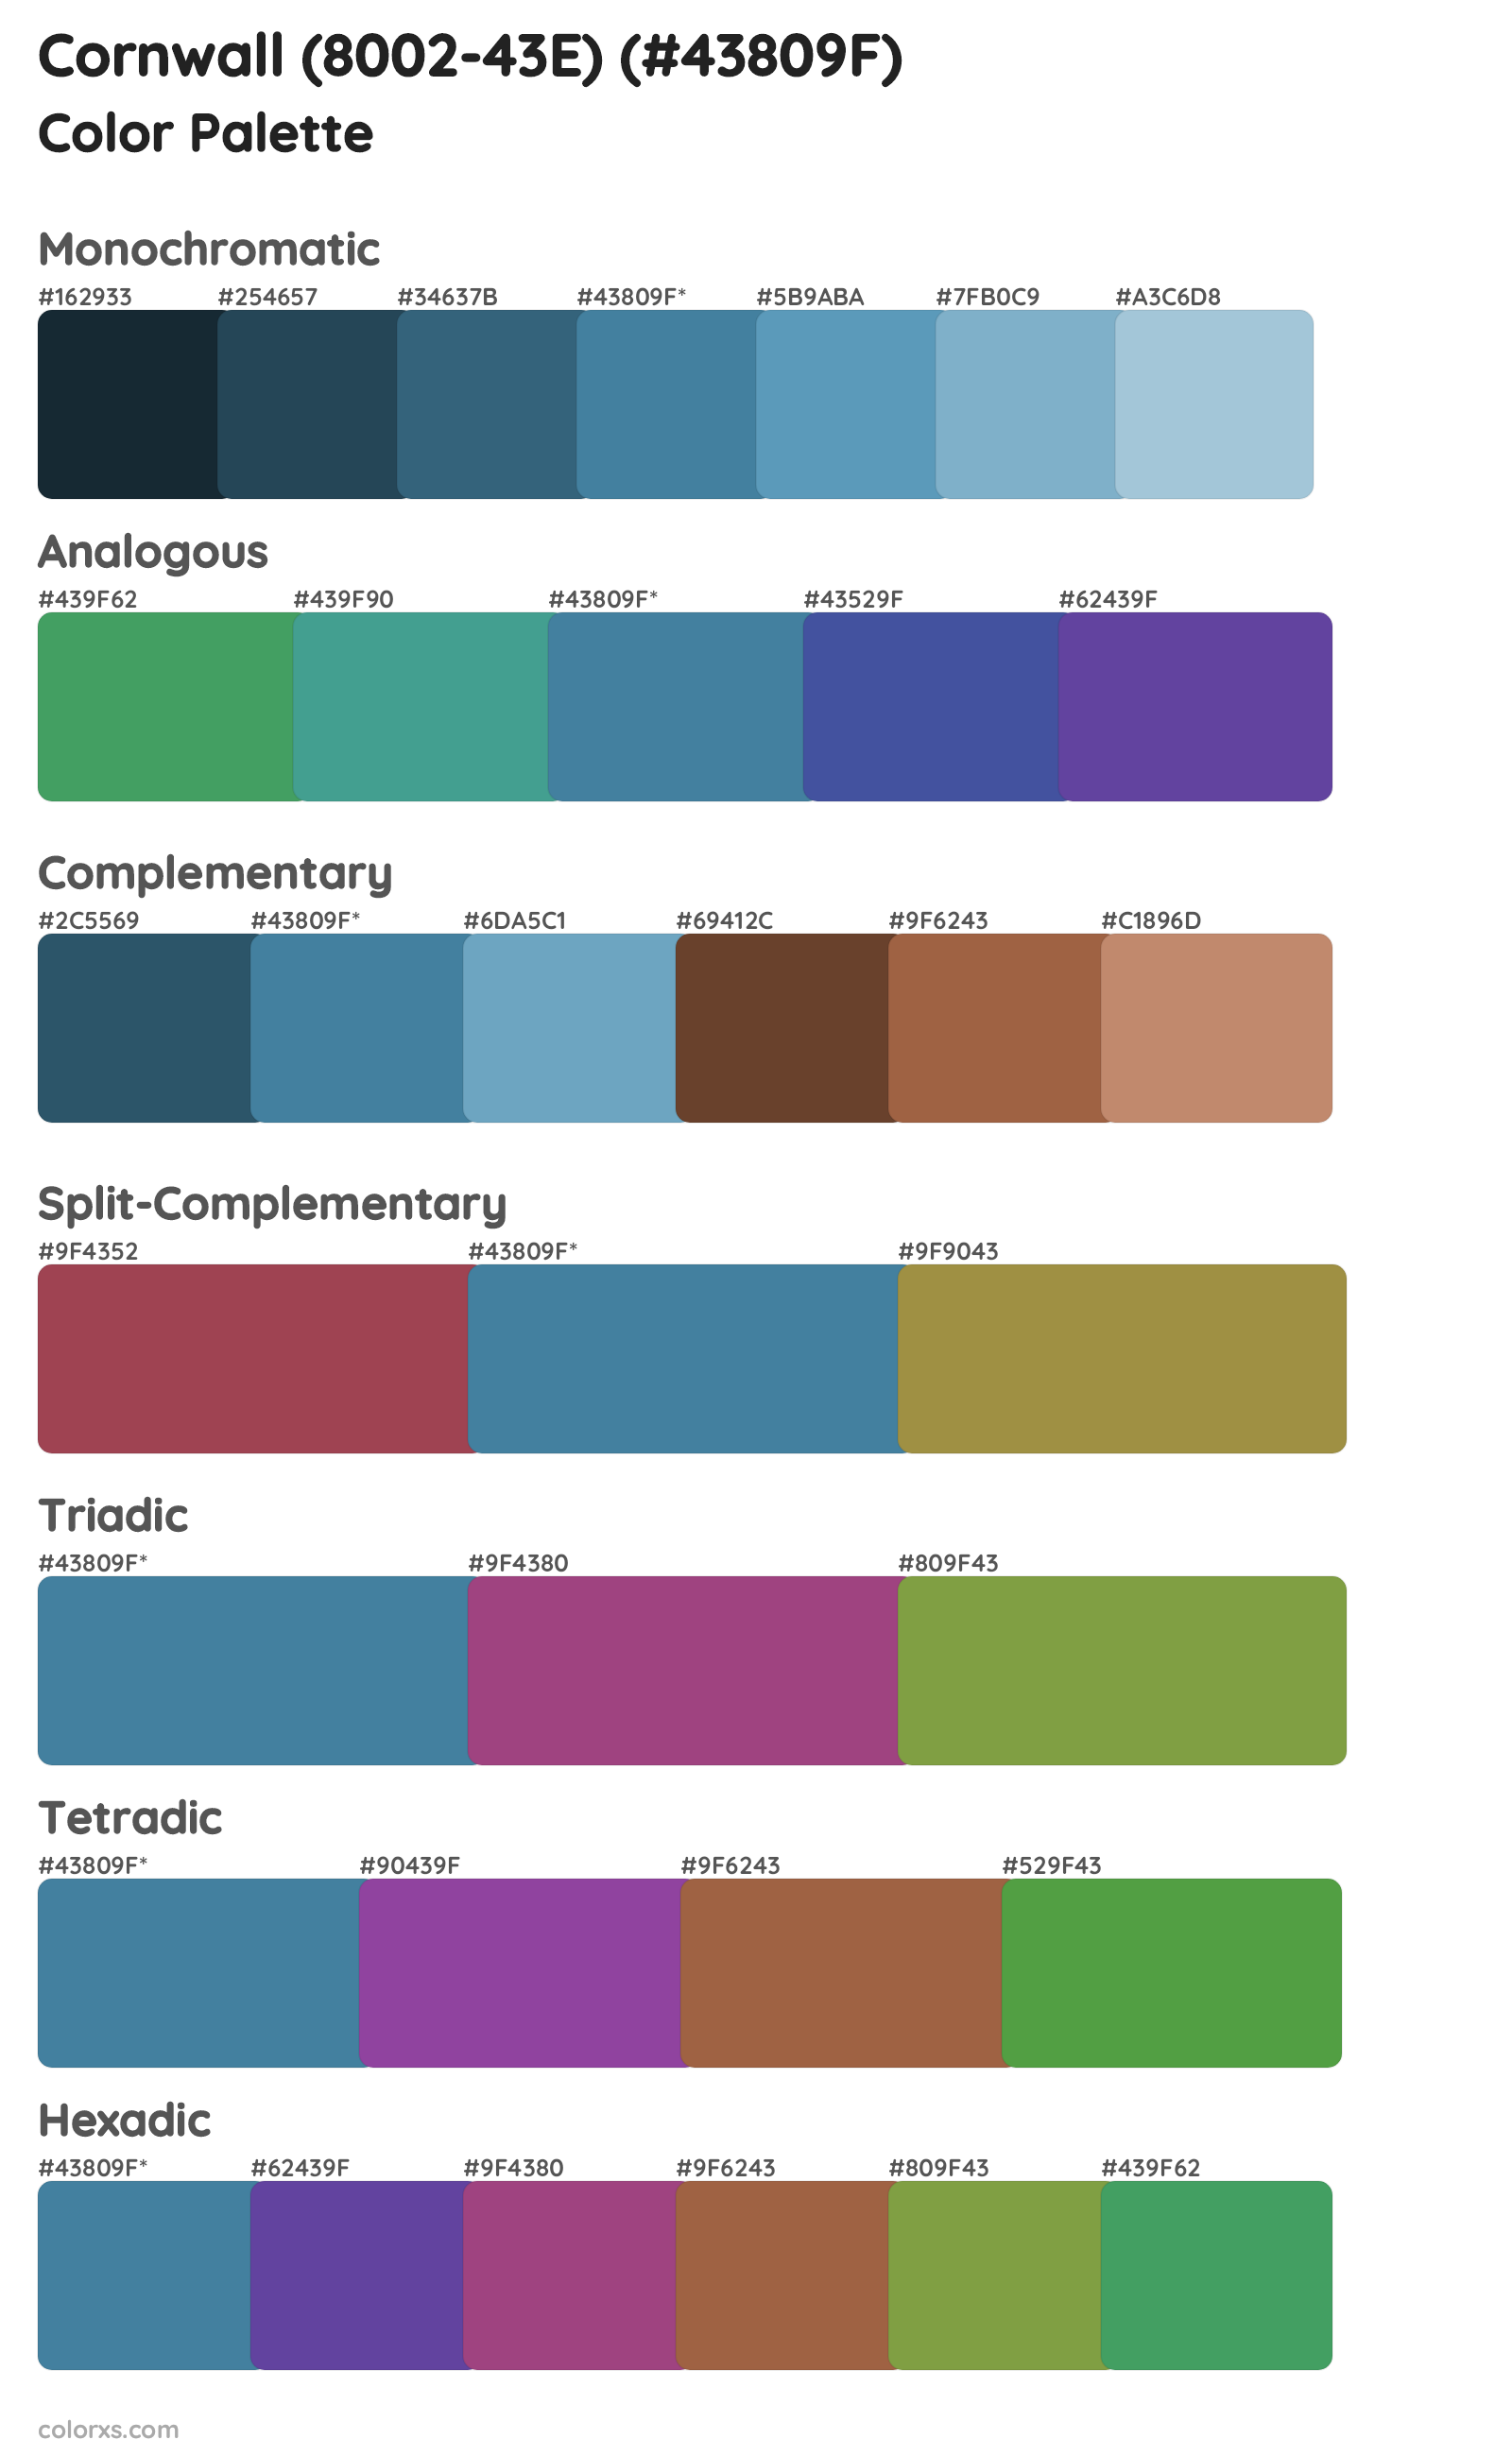 Cornwall (8002-43E) Color Scheme Palettes